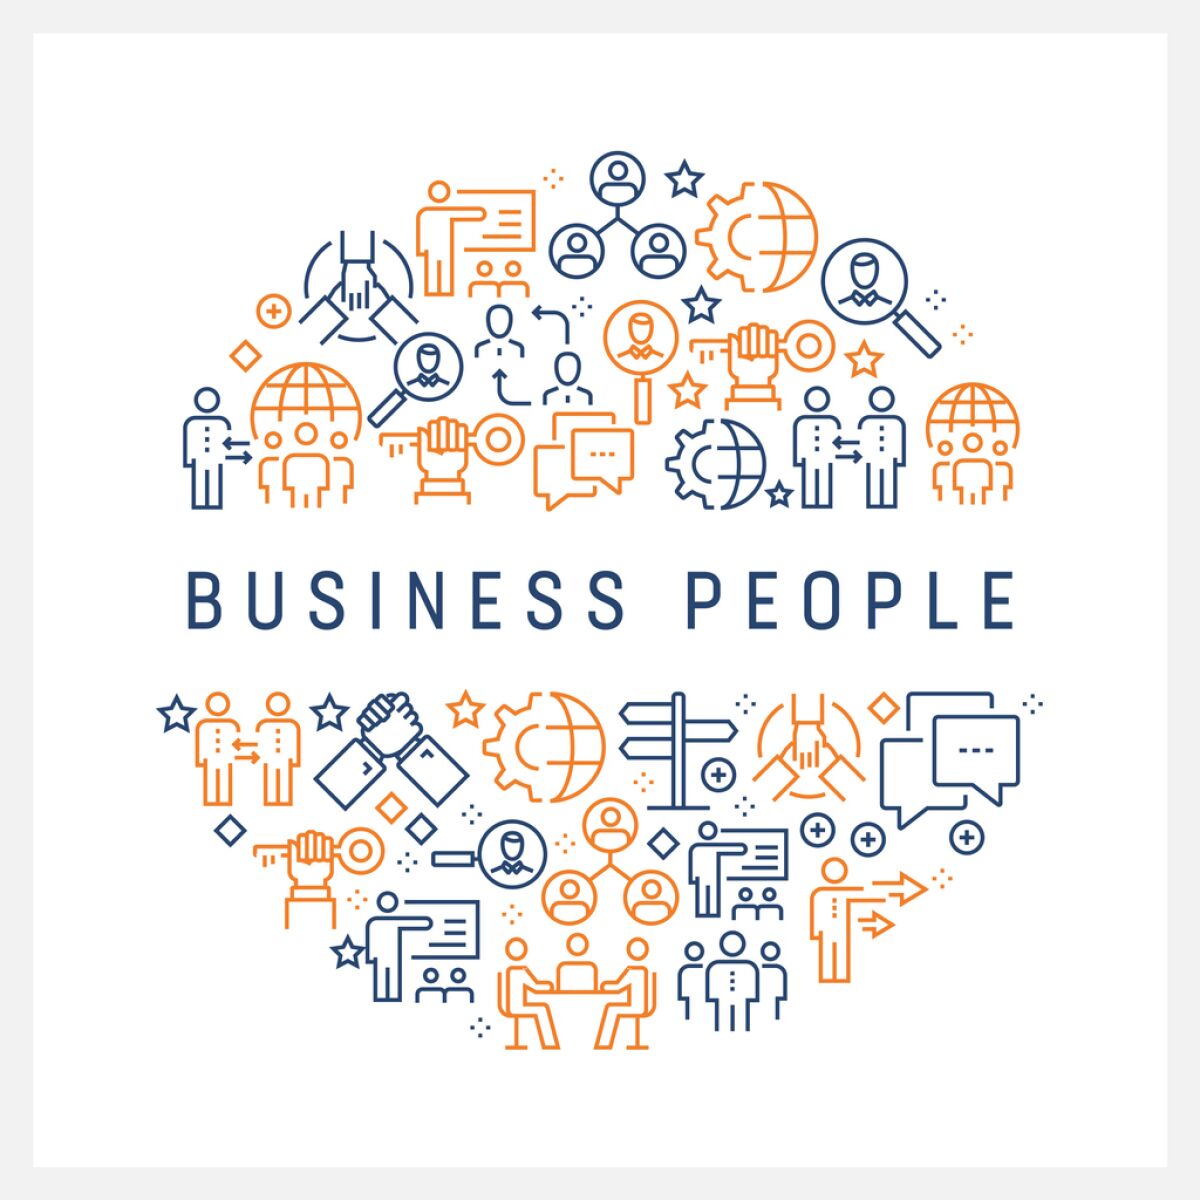 Business people illustration.